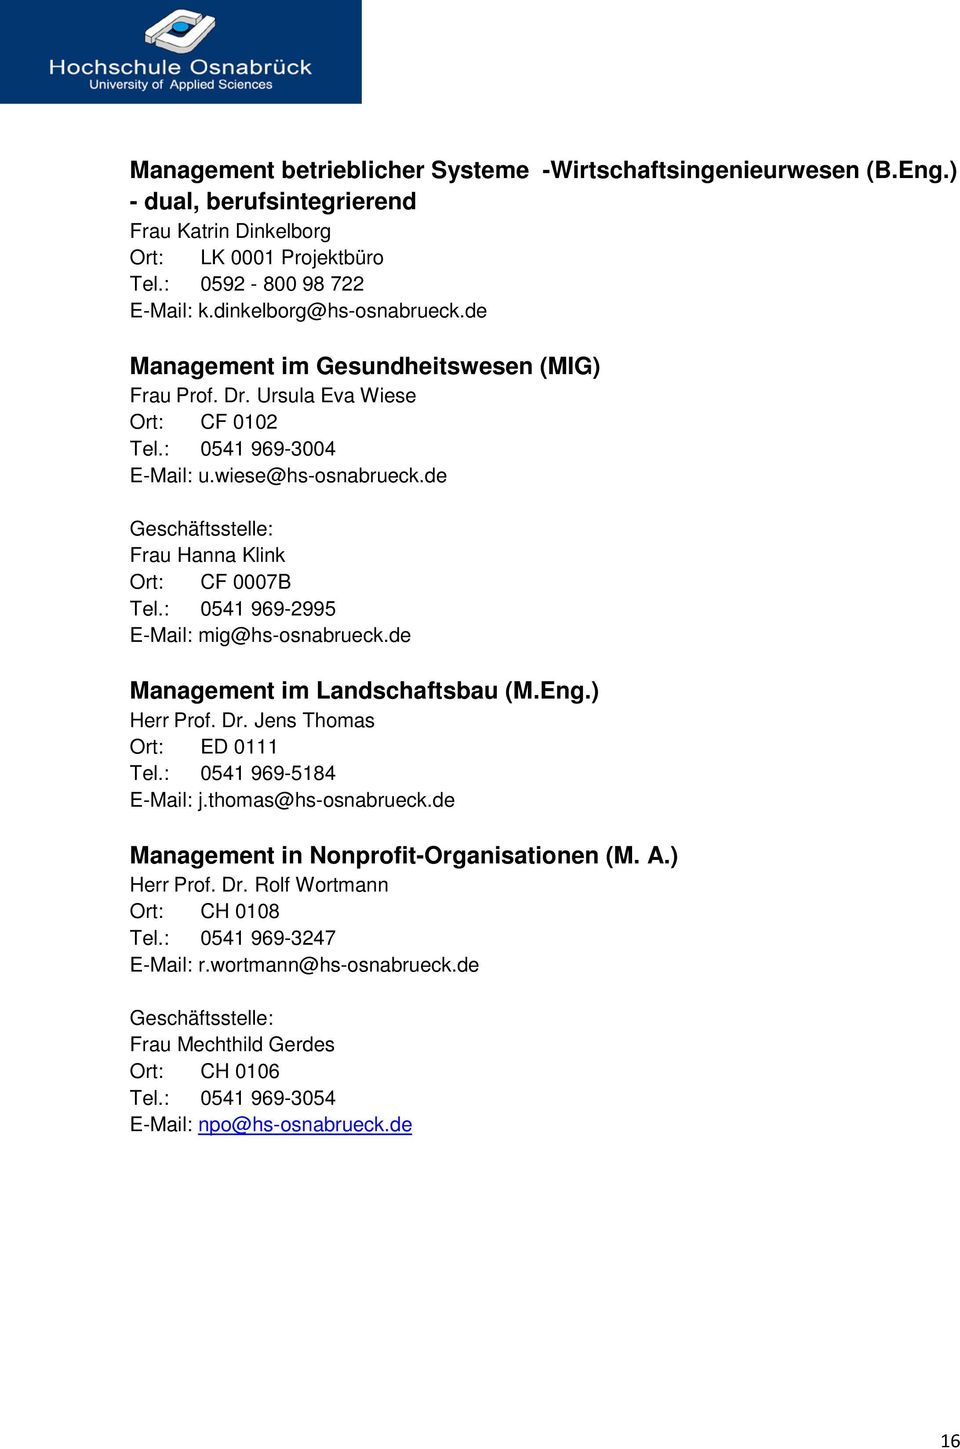 de Frau Hanna Klink Ort: CF 0007B Tel.: 0541 969-2995 E-Mail: mig@hs-osnabrueck.de Management im Landschaftsbau (M.Eng.) Herr Prof. Dr. Jens Thomas Ort: ED 0111 Tel.: 0541 969-5184 E-Mail: j.